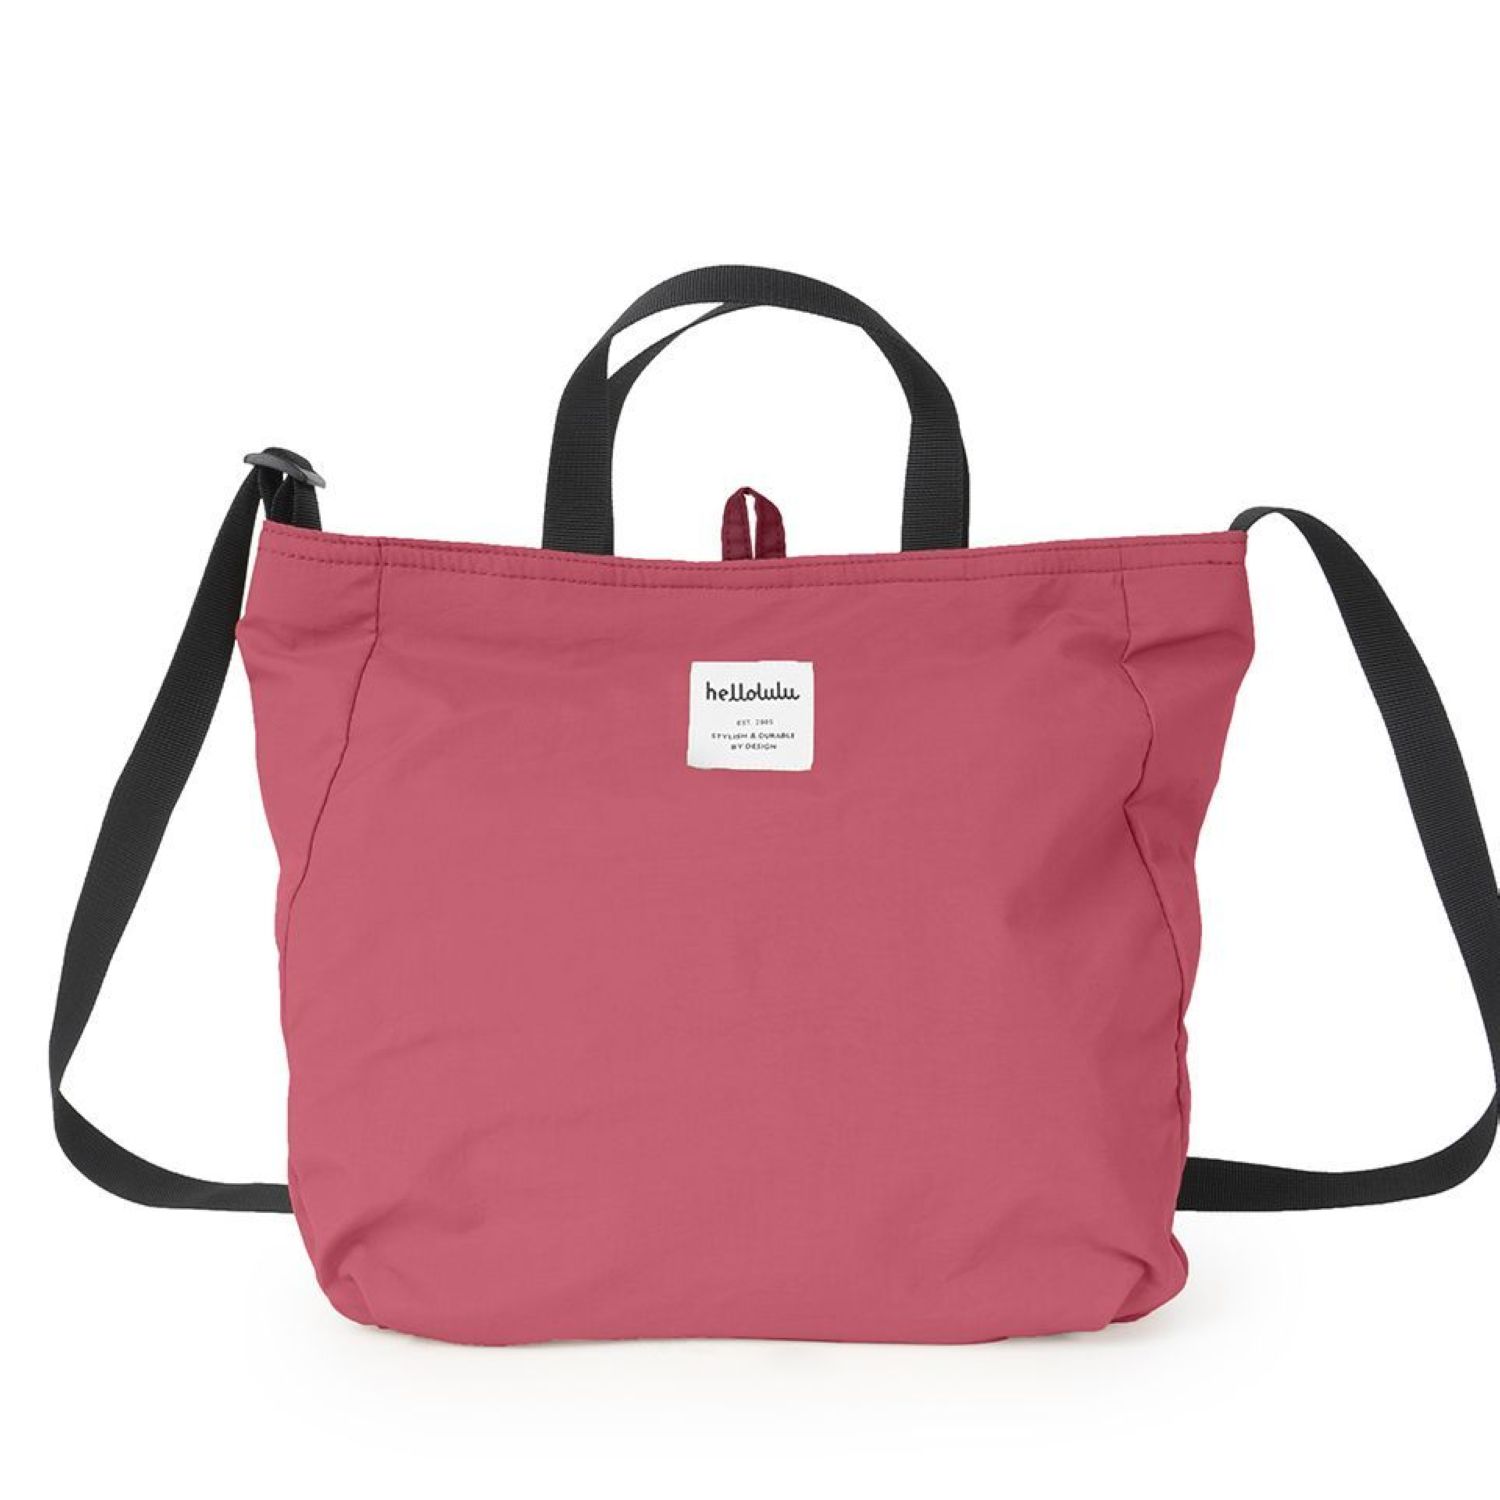 Lululemon Reusable Bags (4) - Gem